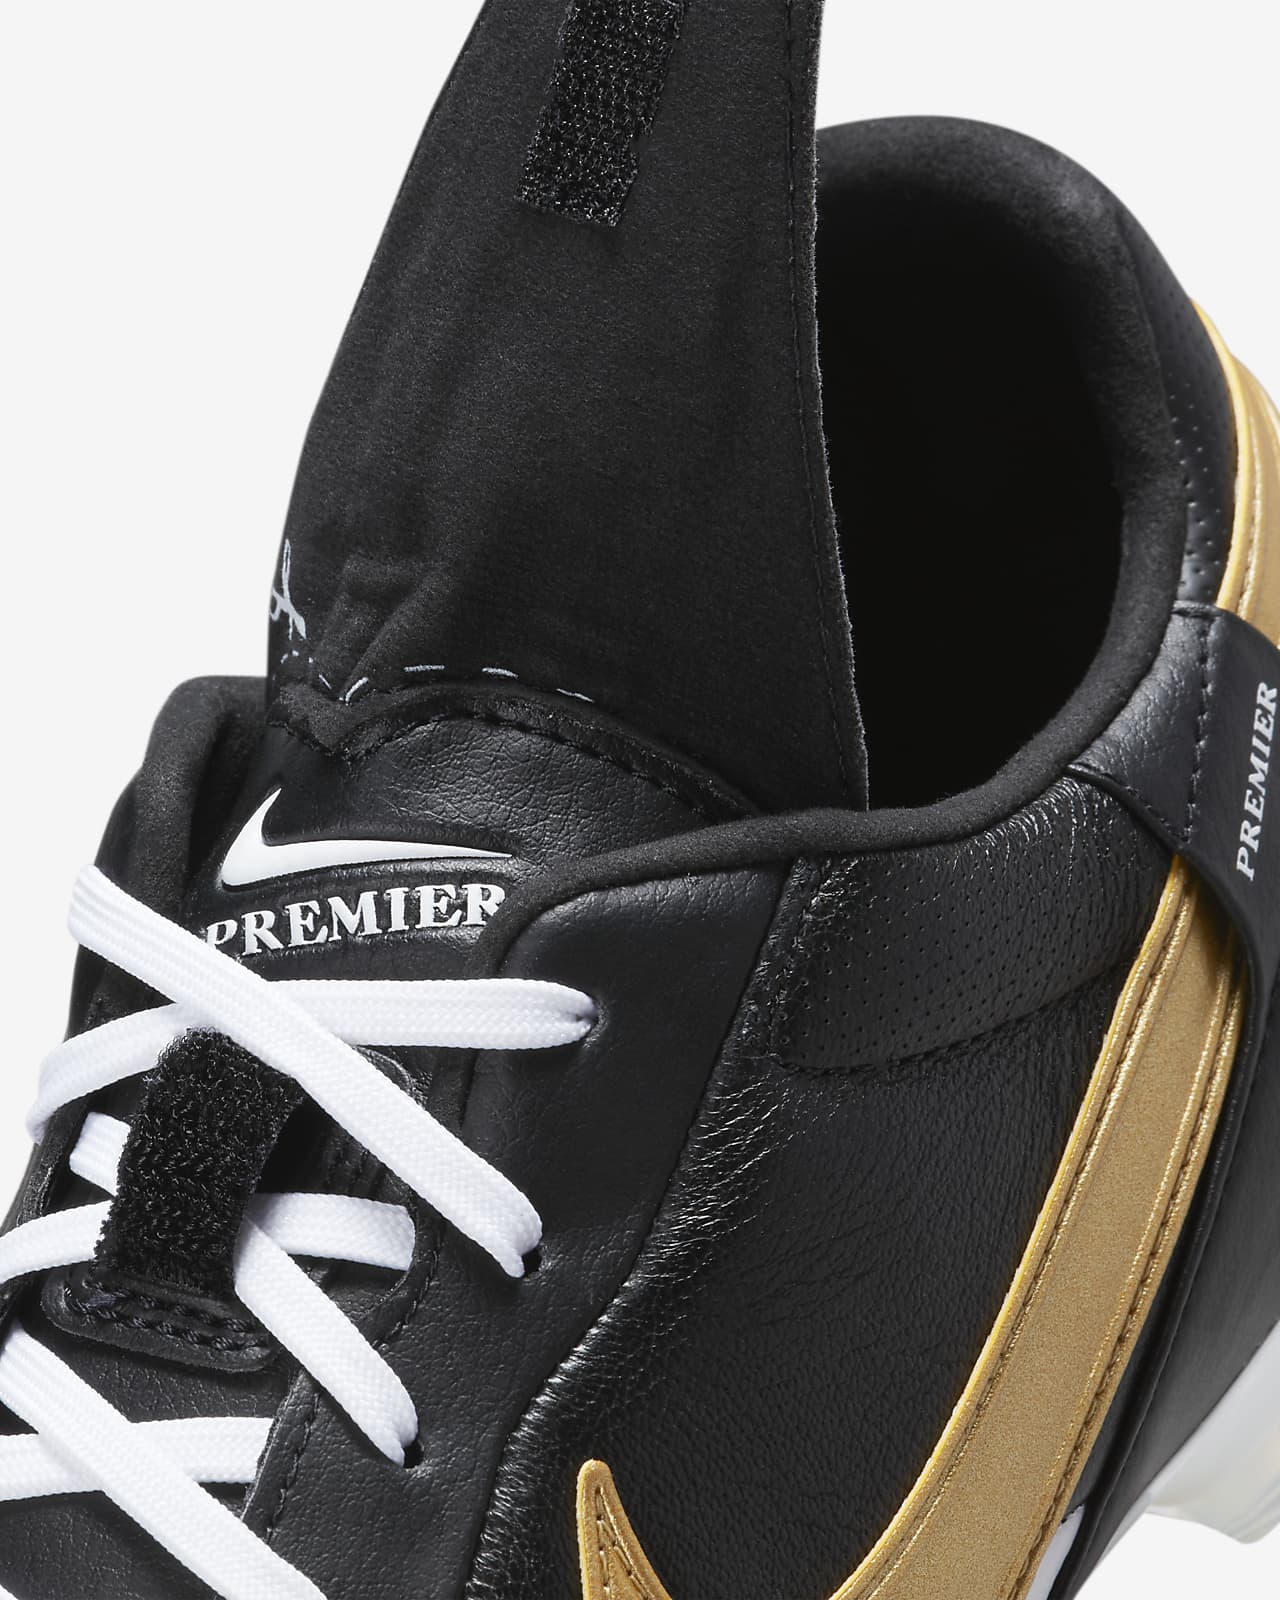 The Nike Premier 3 Cleats. Nike